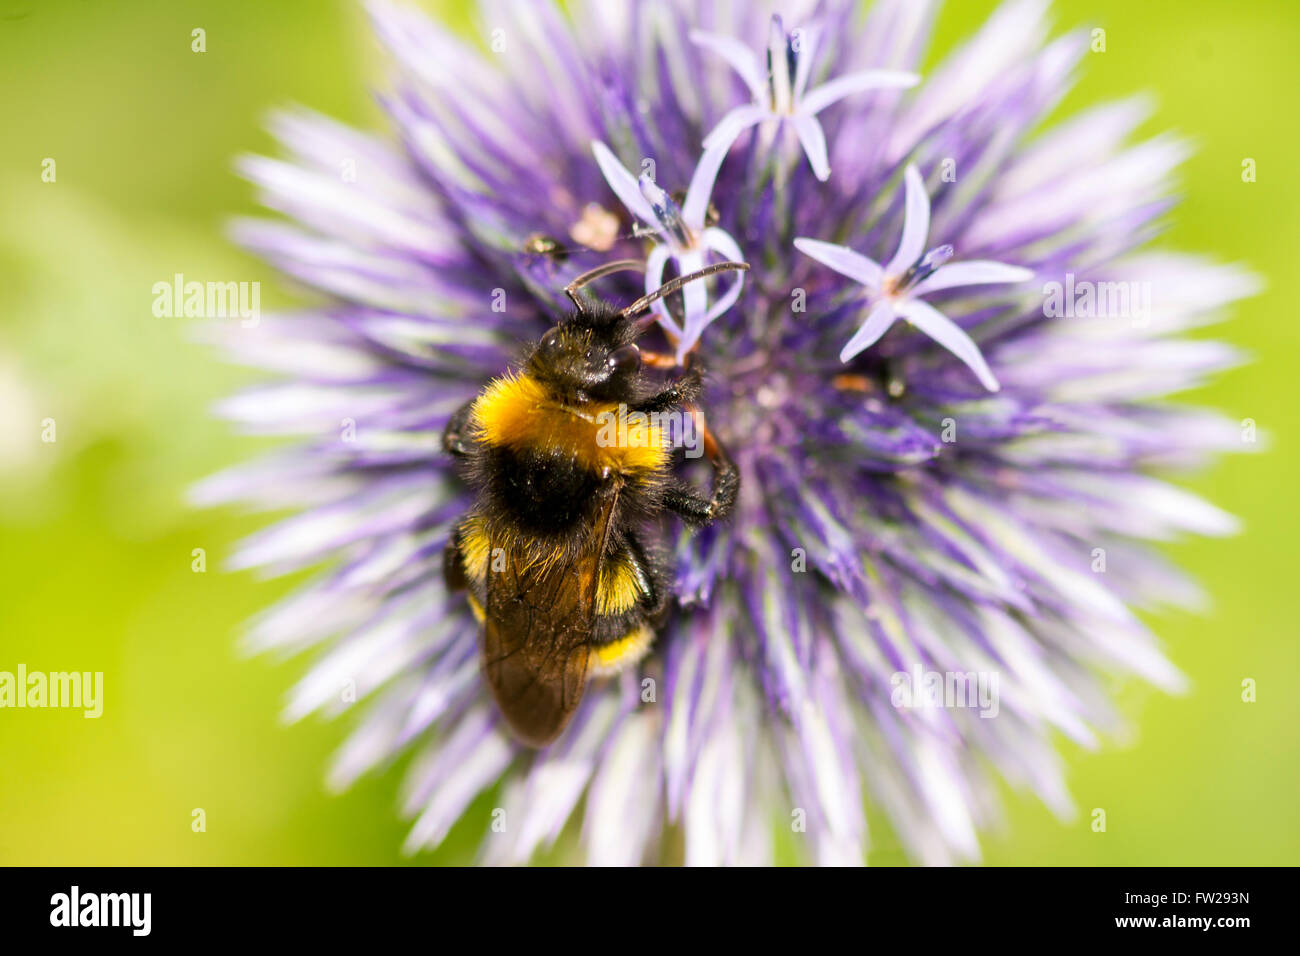 Honey bee on the head of an alium flower Stock Photo